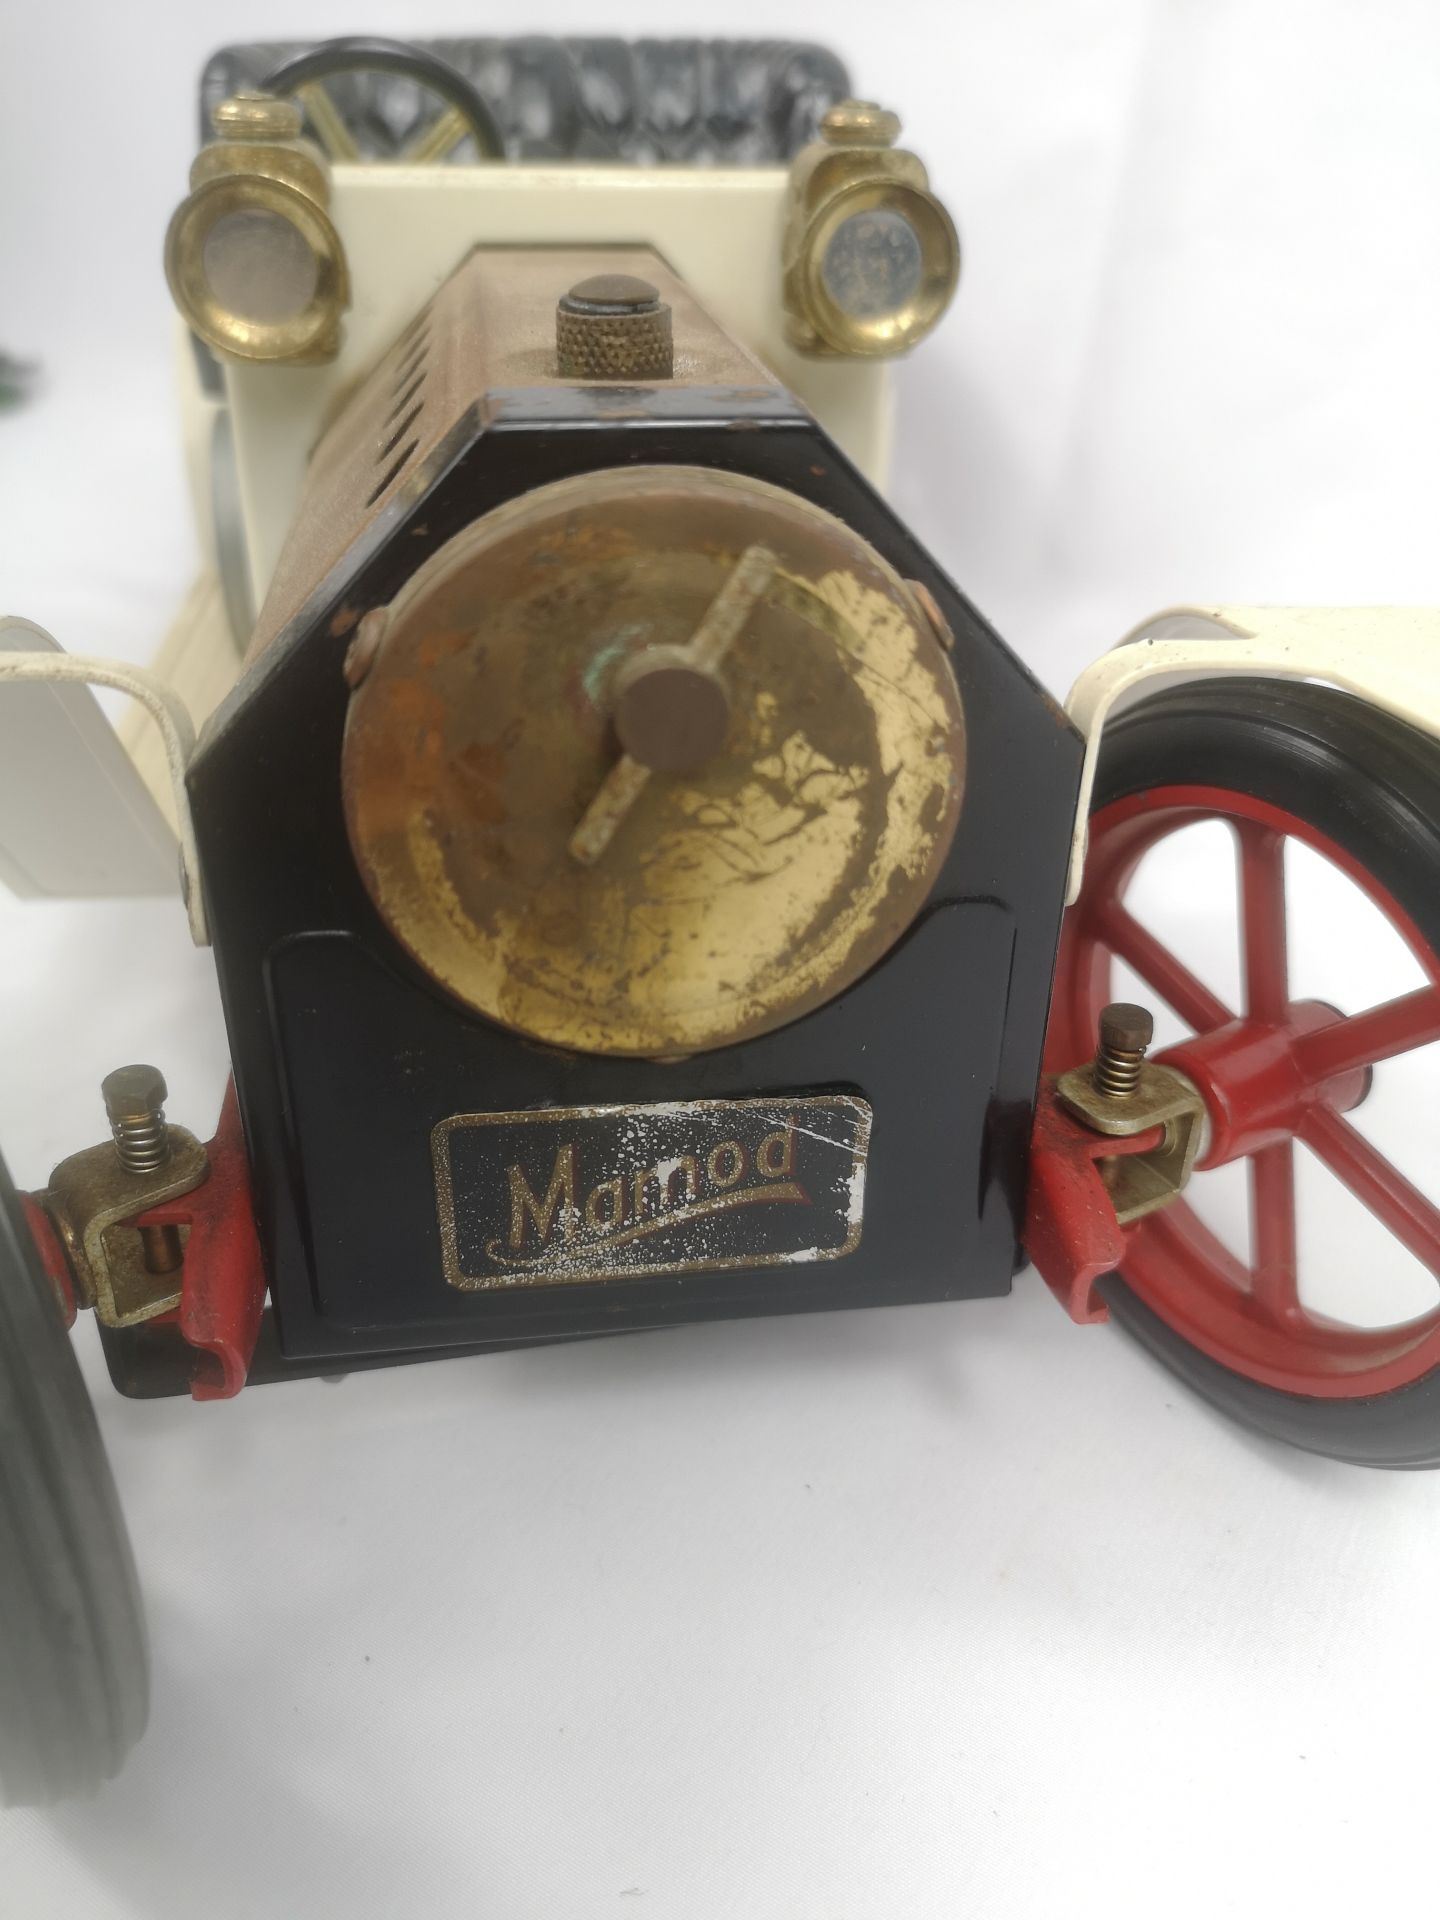 Mamod steam driven car - Image 3 of 7